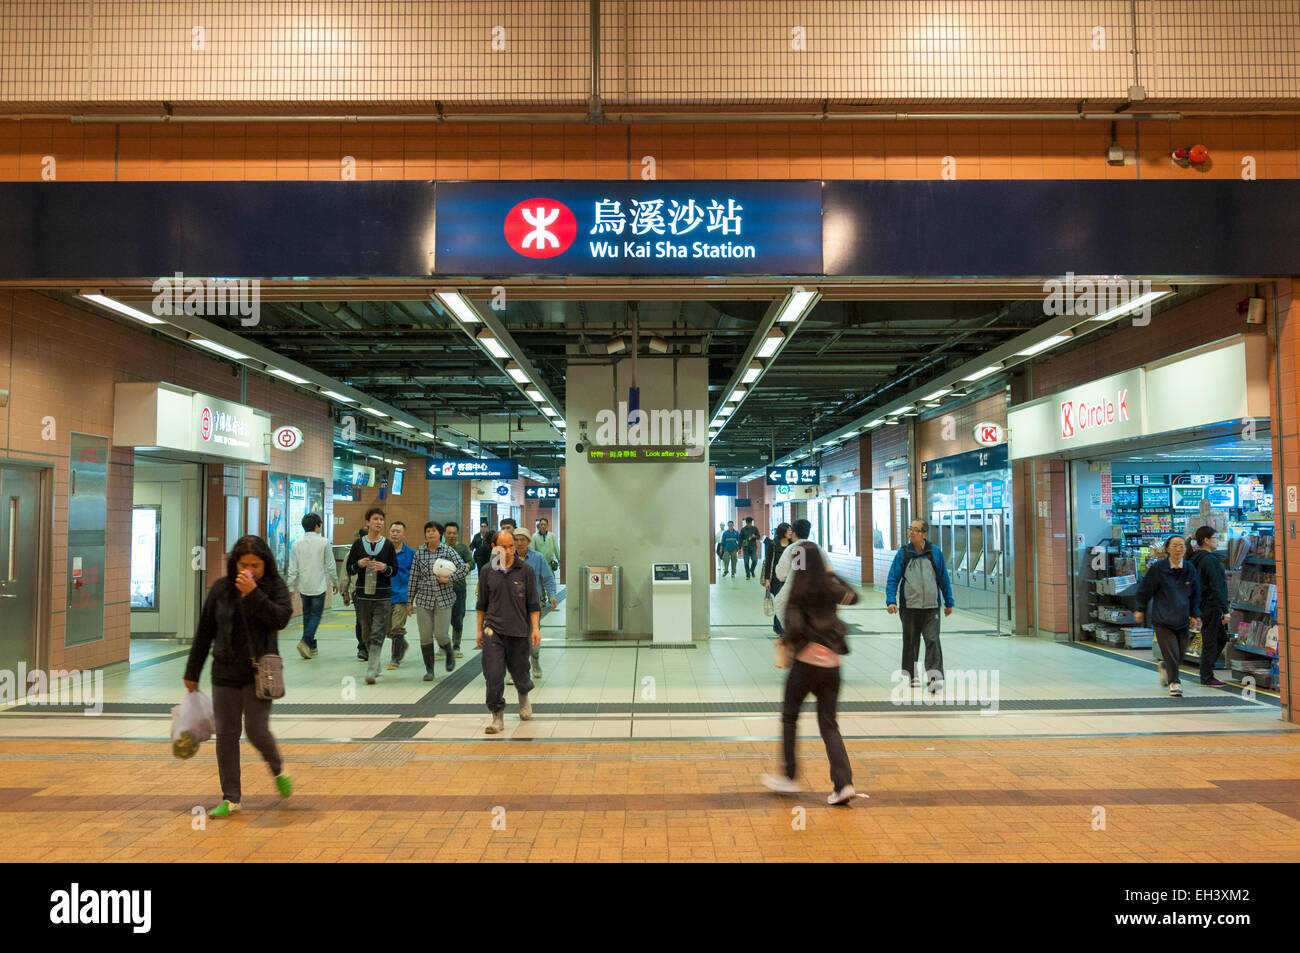 Wu Kai Sha metro station, New Territories, Hong Kong SAR Stock Photo